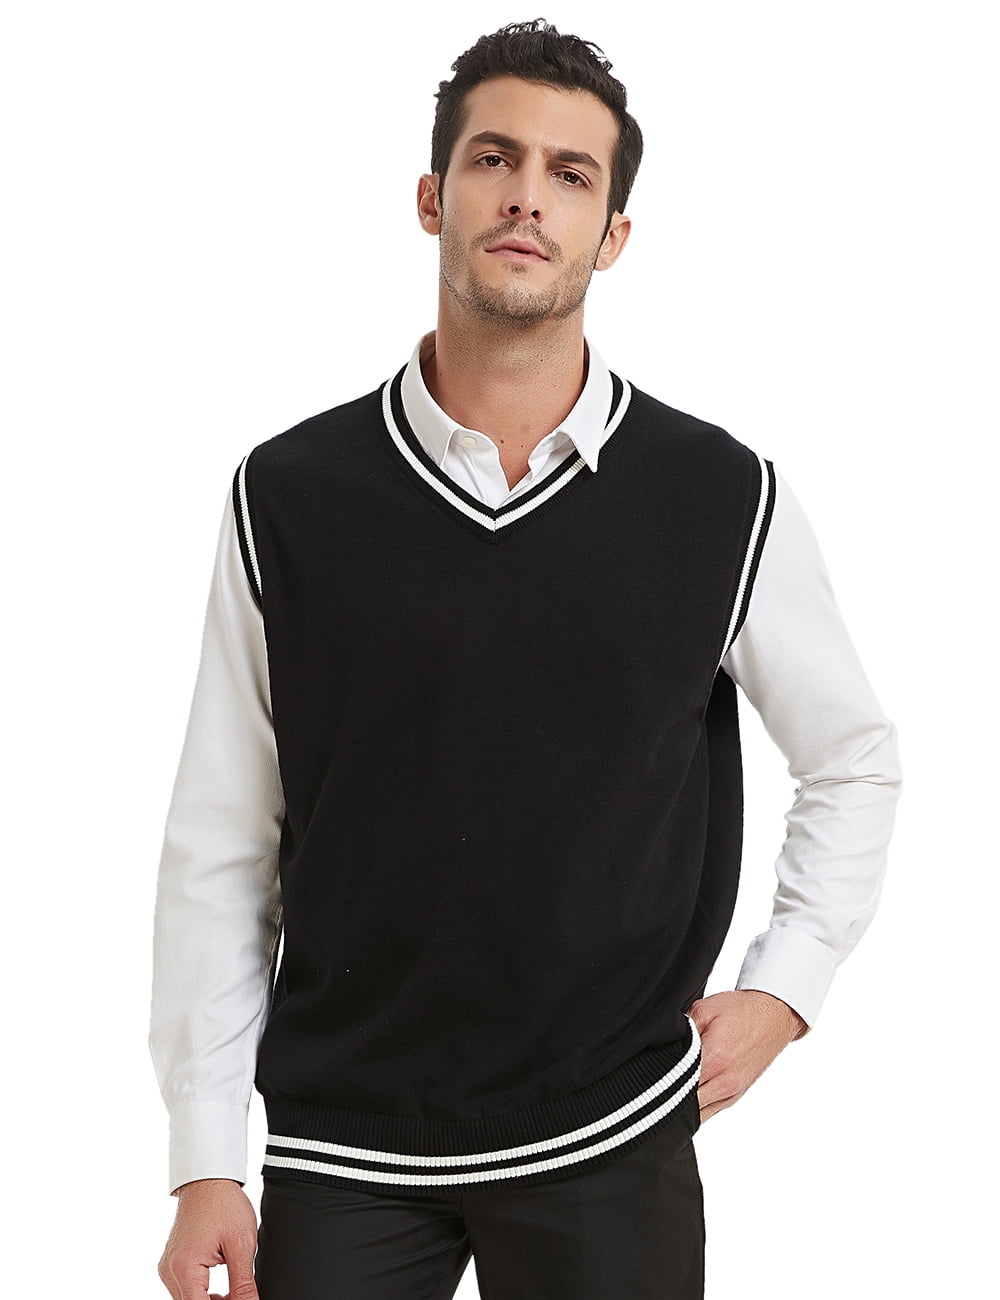 Toptie Mens Sweater Vest Black And White Trimmed V Neck Soft Knit